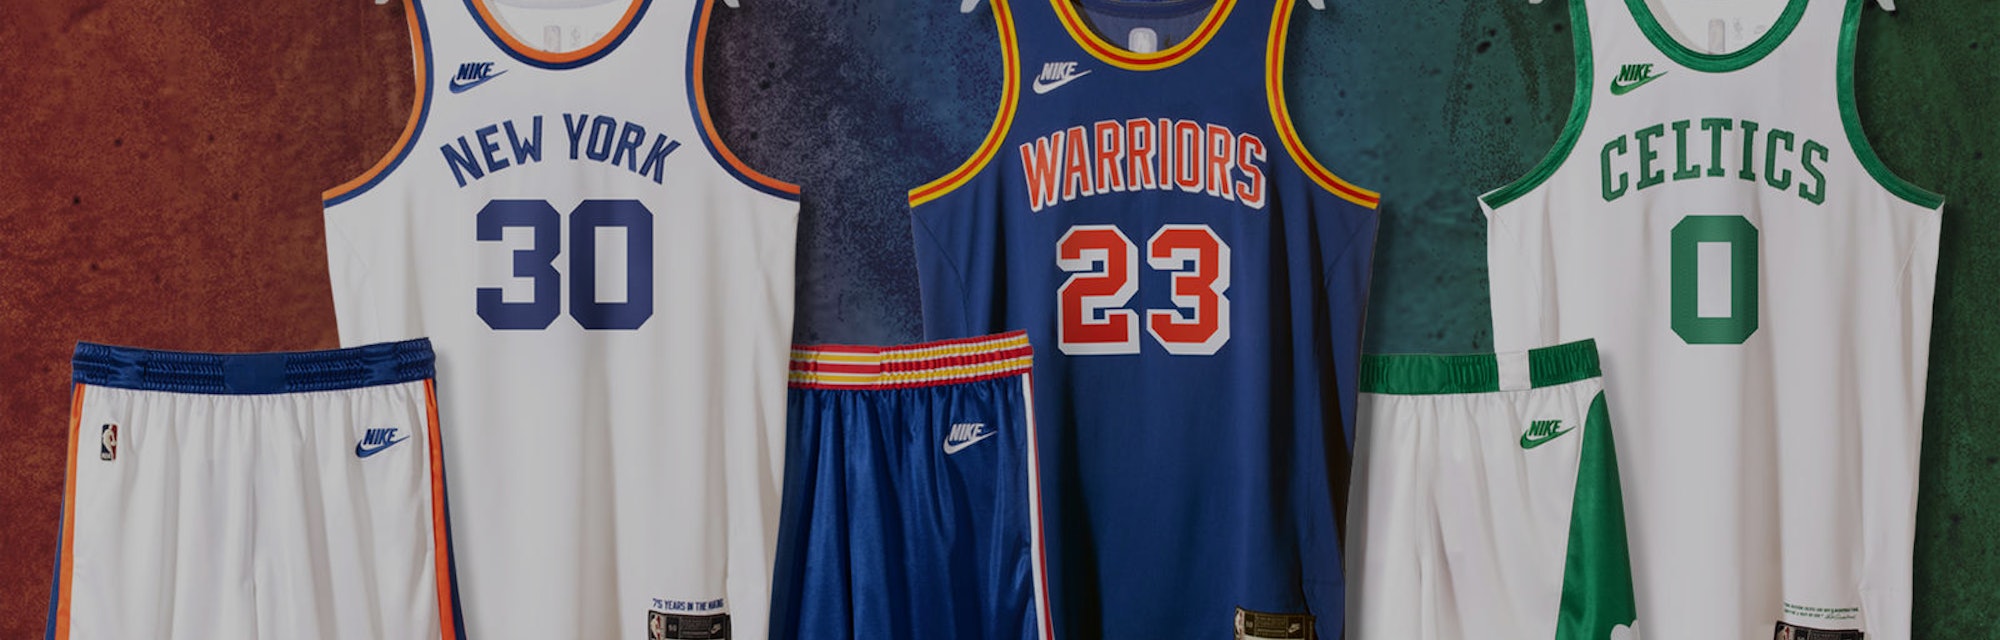 retro NBA basketball jerseys may hottest years